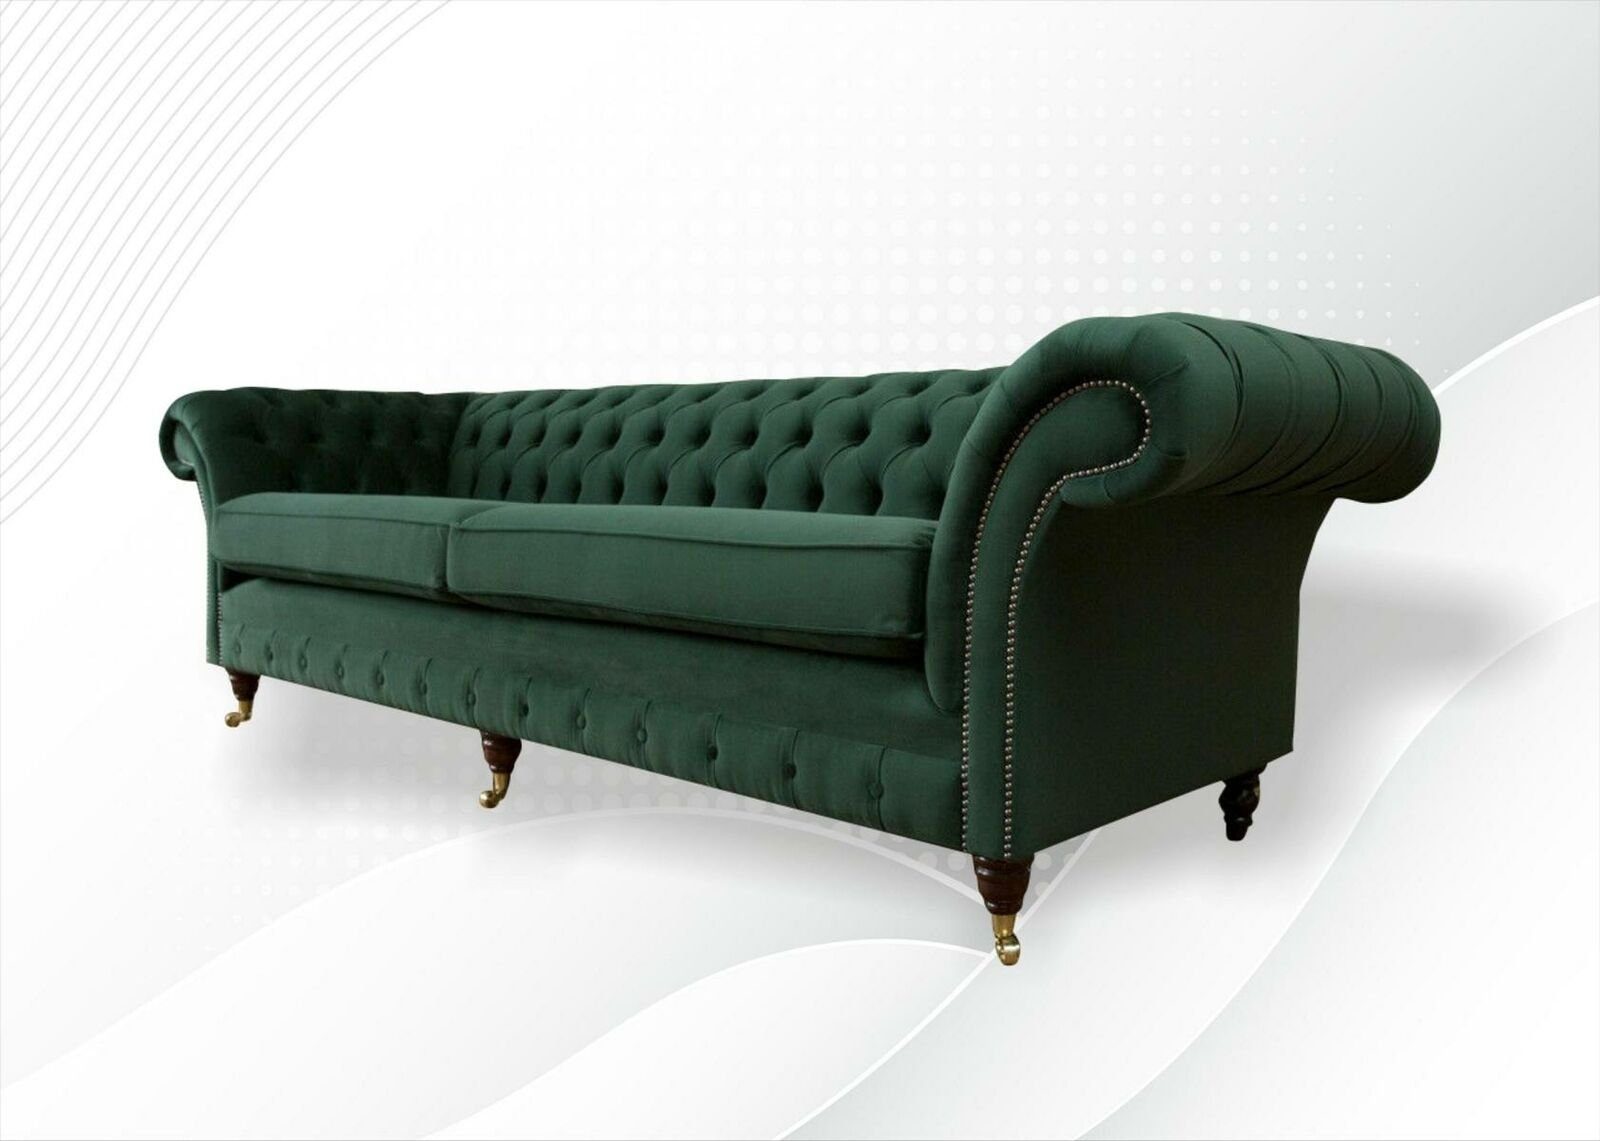 JVmoebel Chesterfield-Sofa Große Luxus Grüne Chesterfield Sofa moderne Couch Neu, Made in Europe